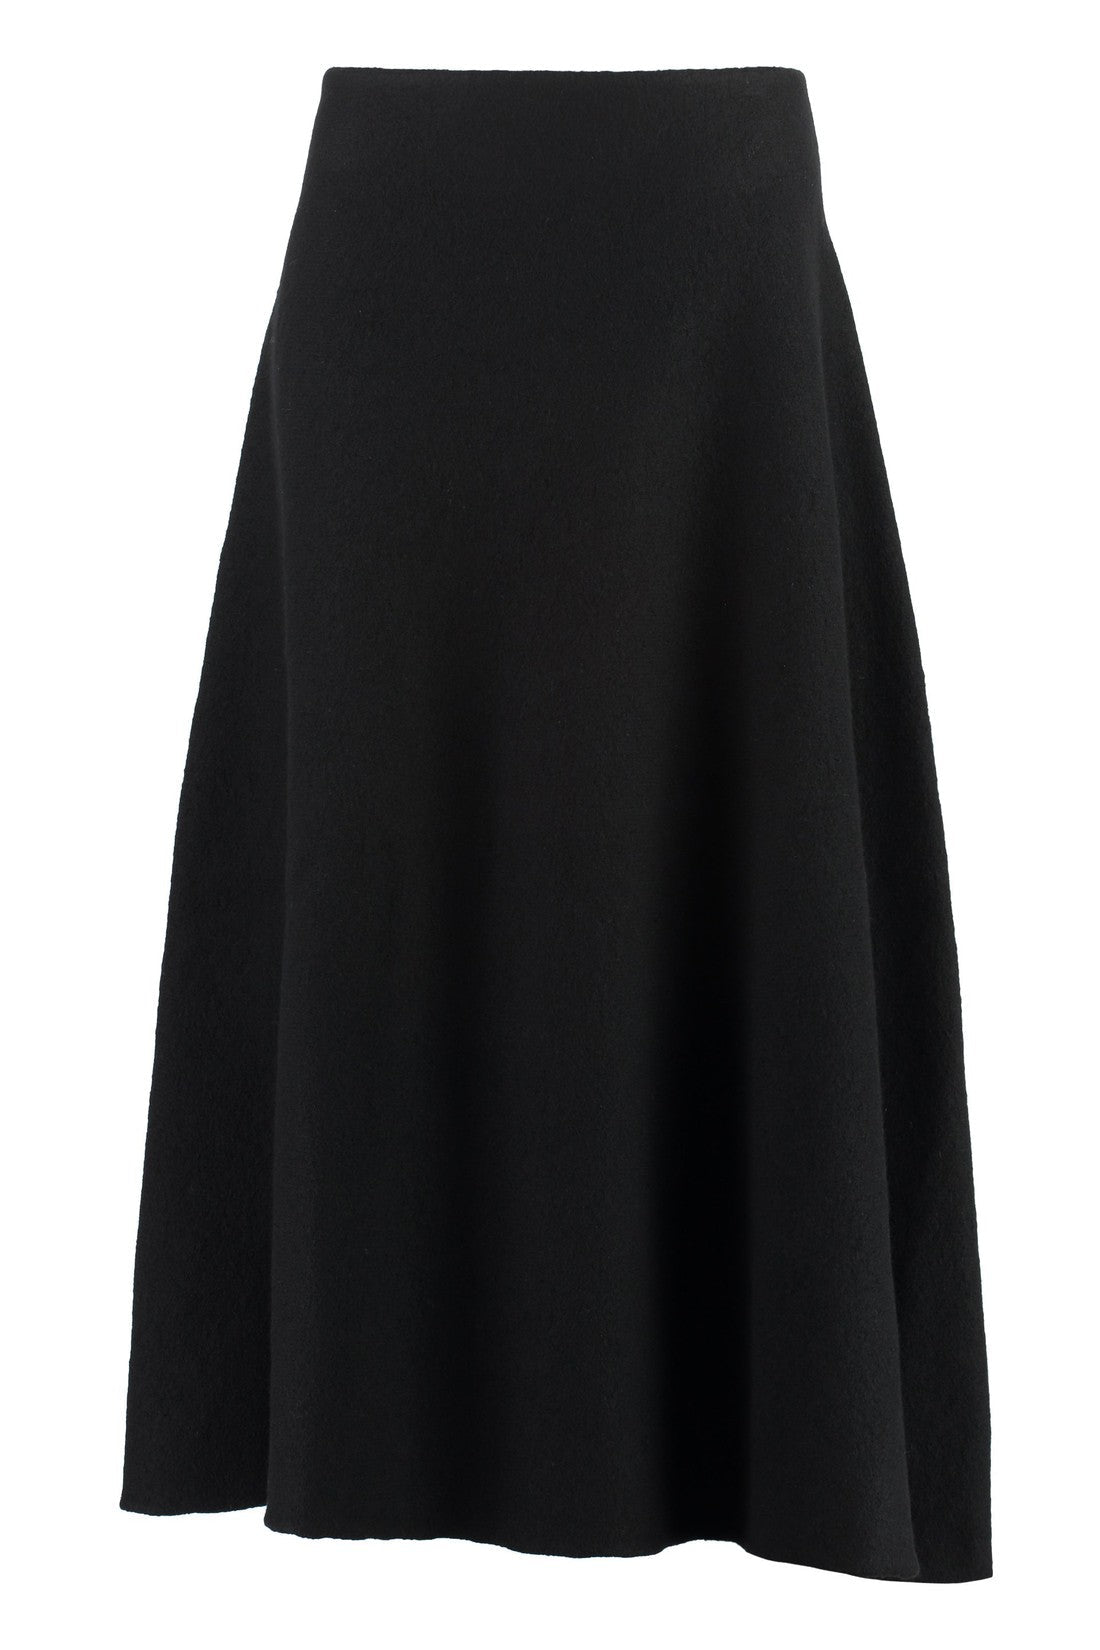 Jil Sander-OUTLET-SALE-Asymmetrical wool skirt-ARCHIVIST